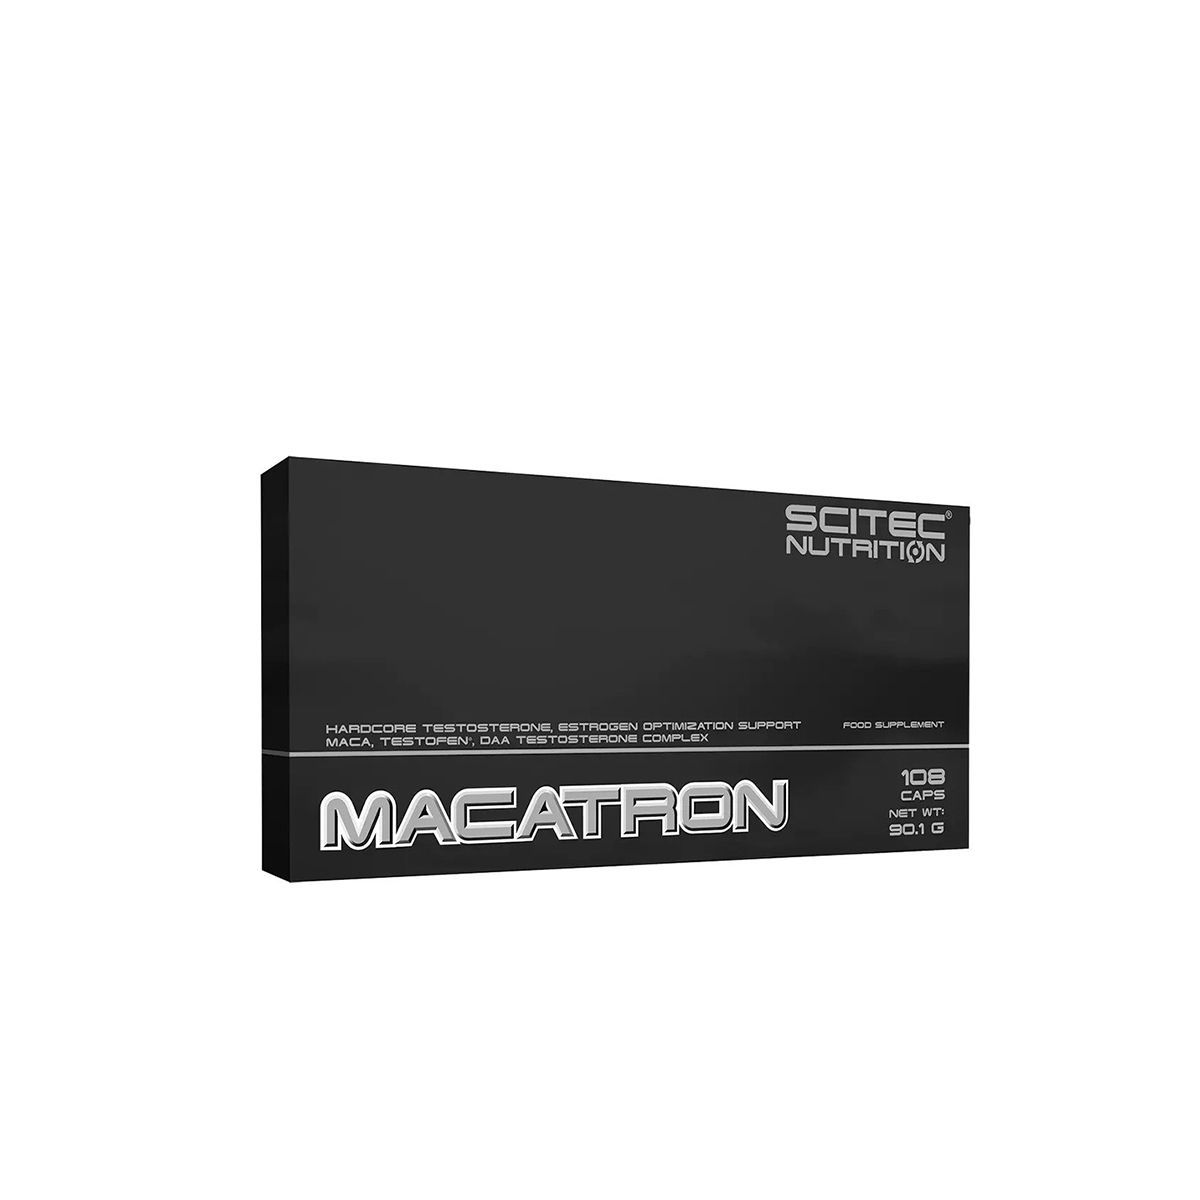 Scitec Nutrition - Macatron - Hardcore Testosterone, Estrogen Optimization - 108 kapszula